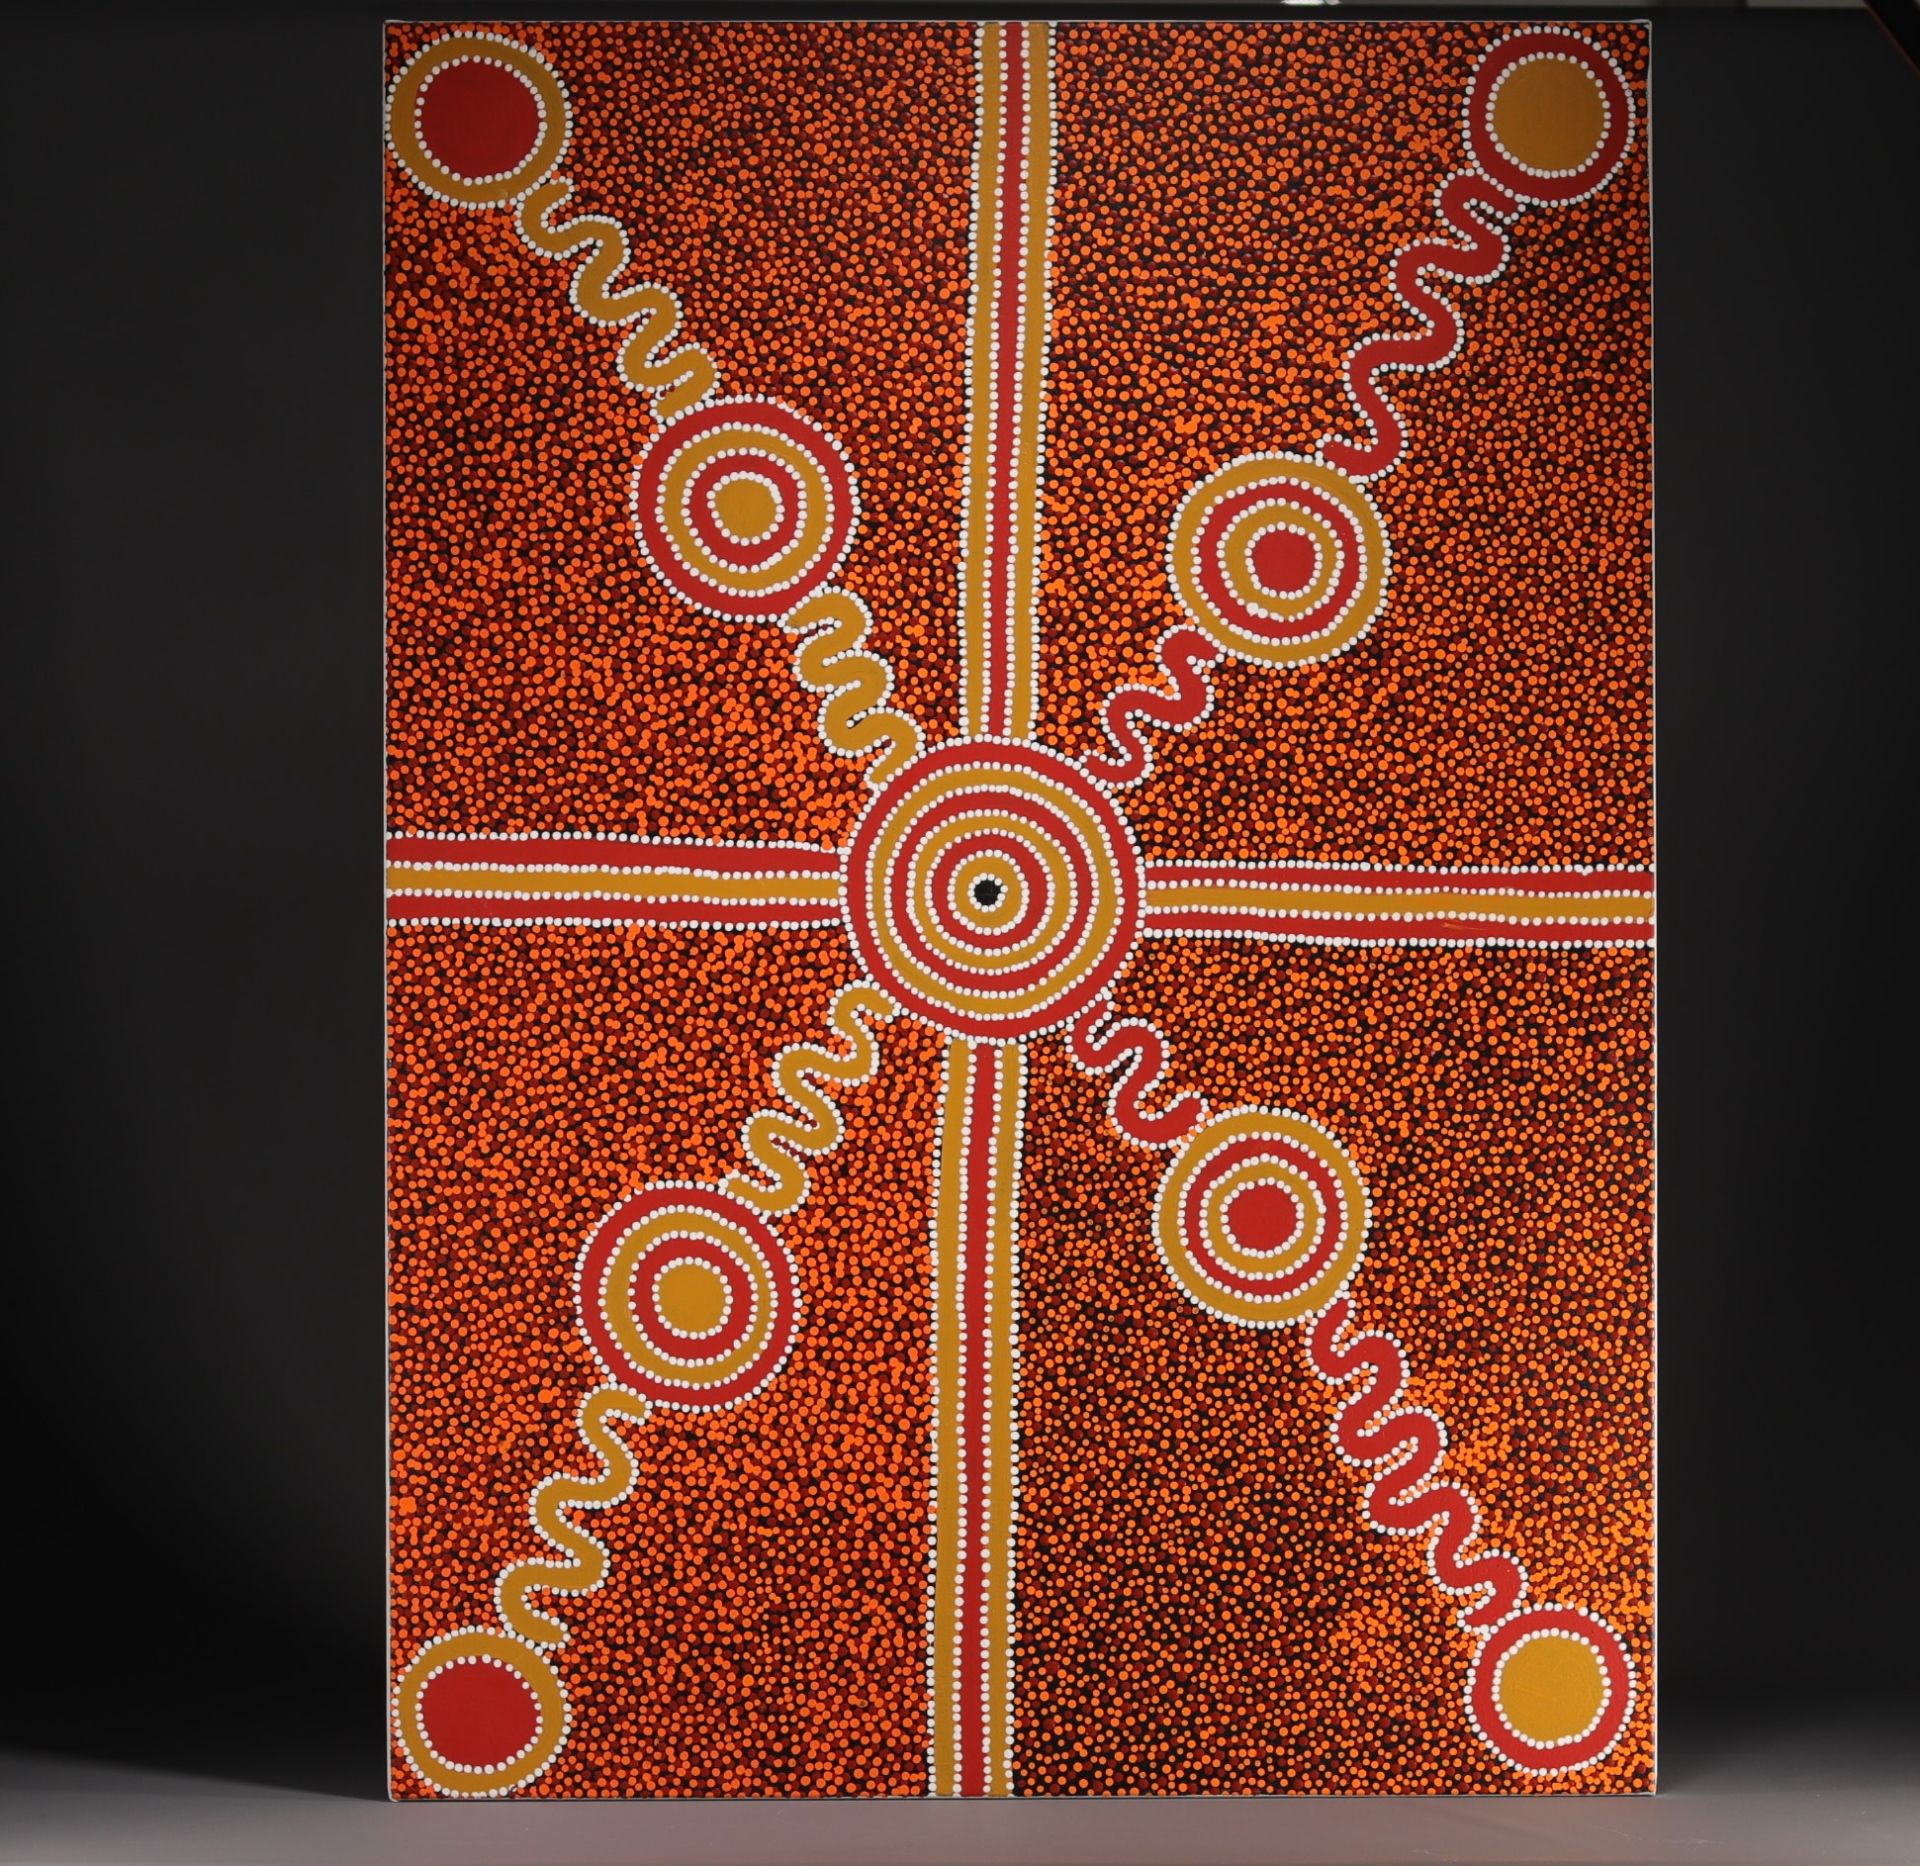 Ronnie BIRD JUNGALA (1960/72-2016) Large acrylic painting on Aboriginal canvas.